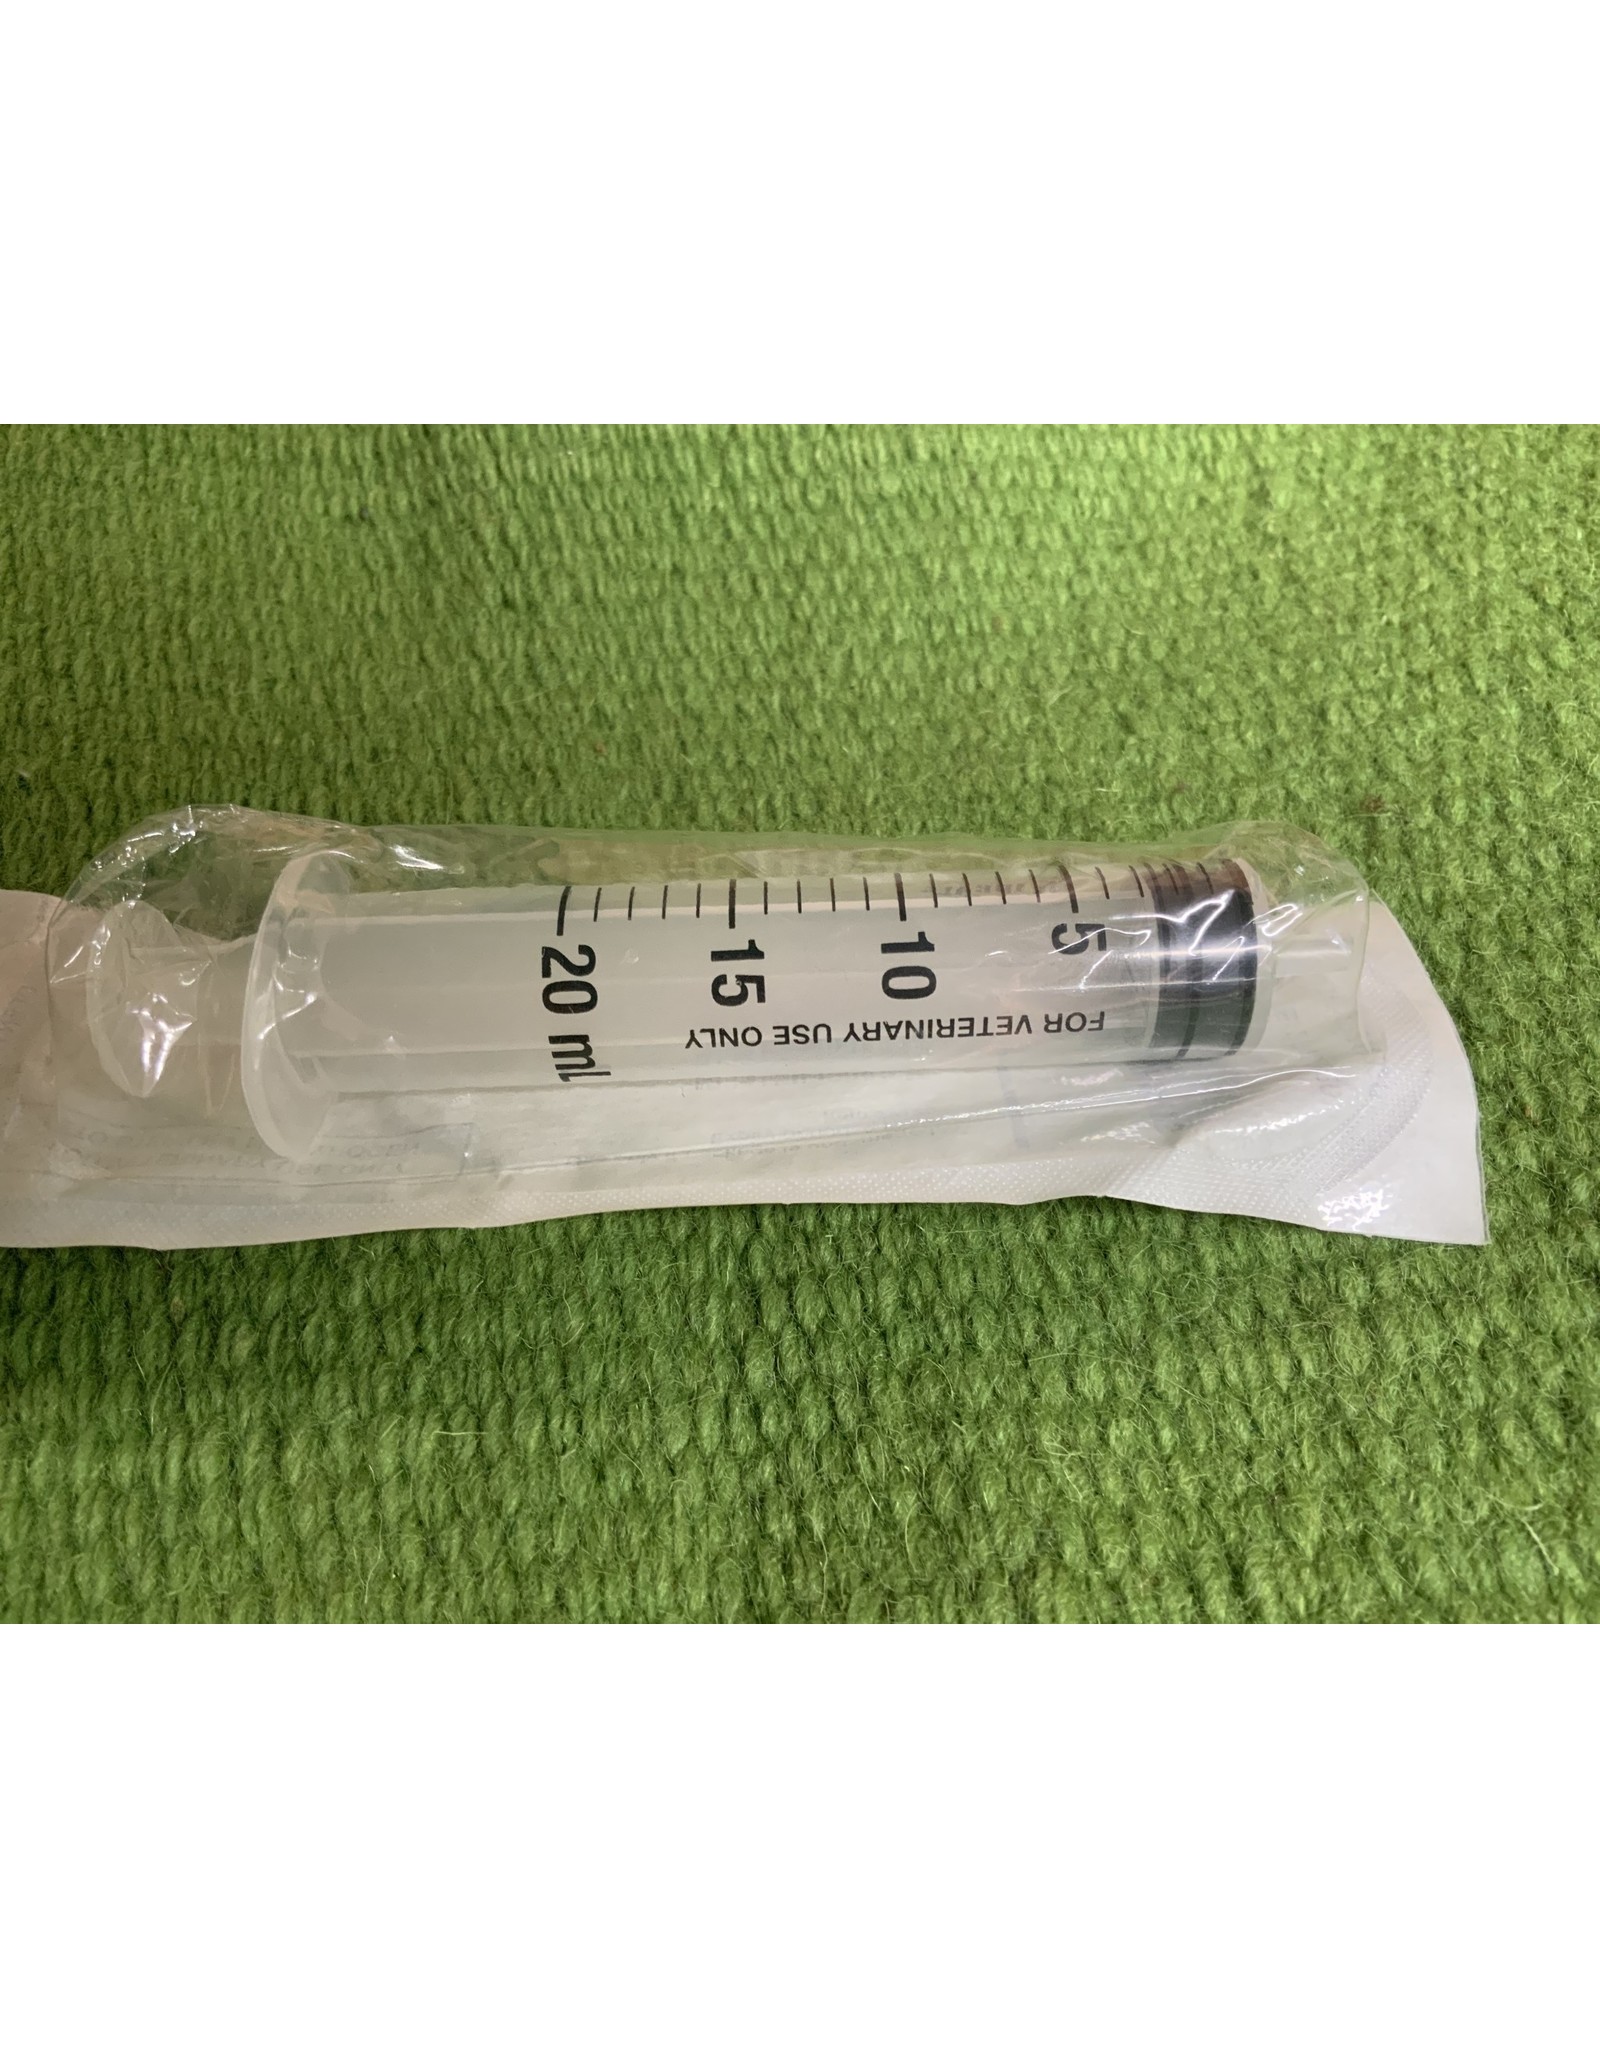 Syringe*  20 cc Slip Syringe Disposable 50 PK  - 034-085